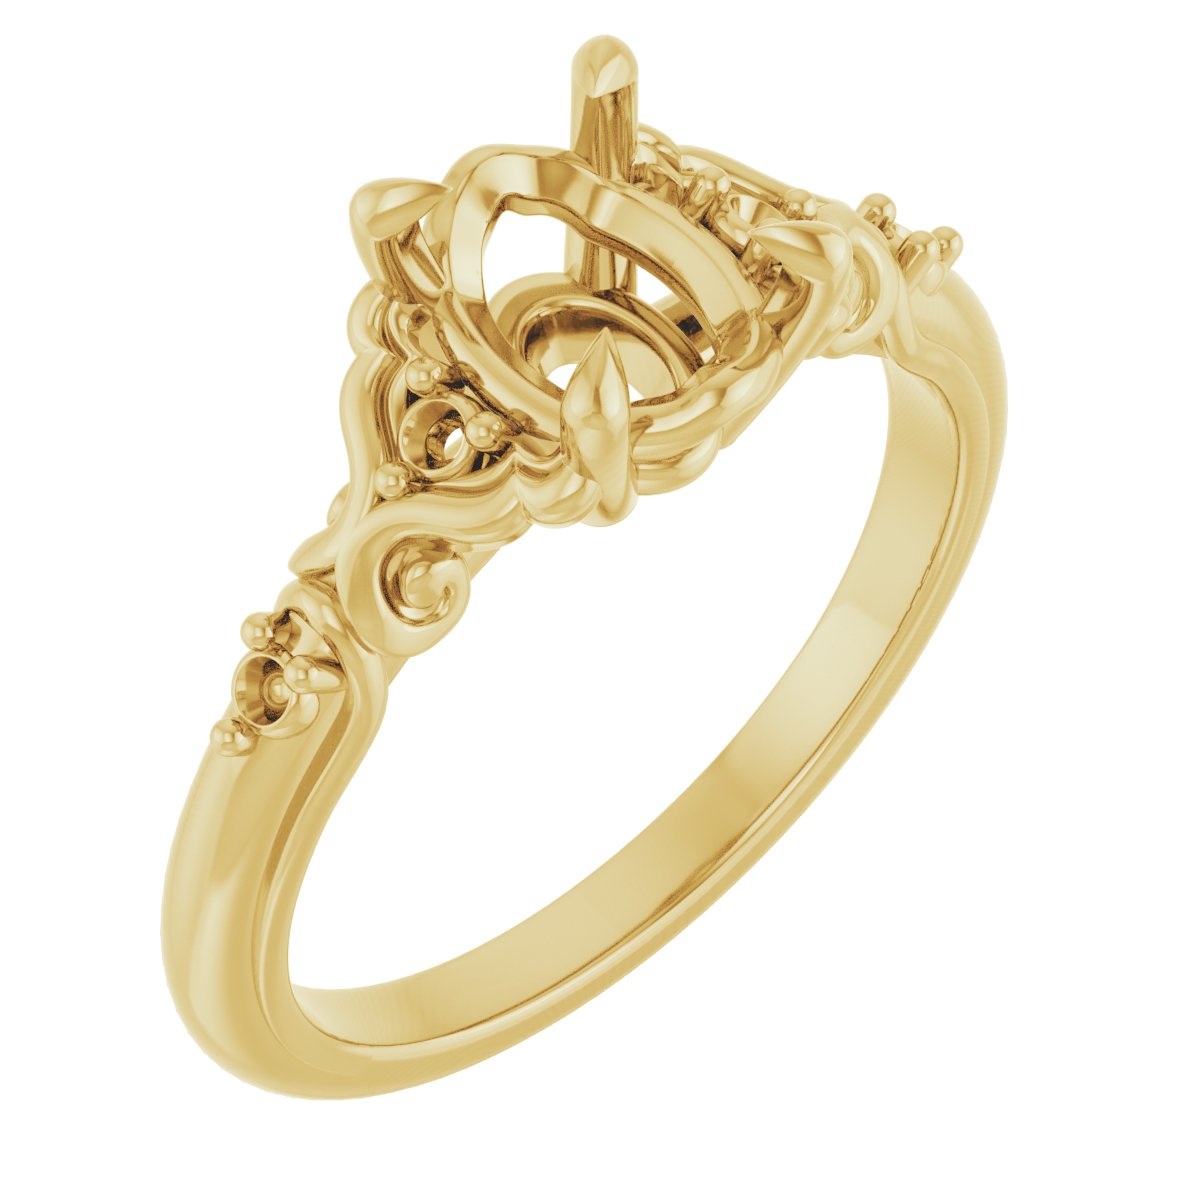 Sculptural Engagement Ring